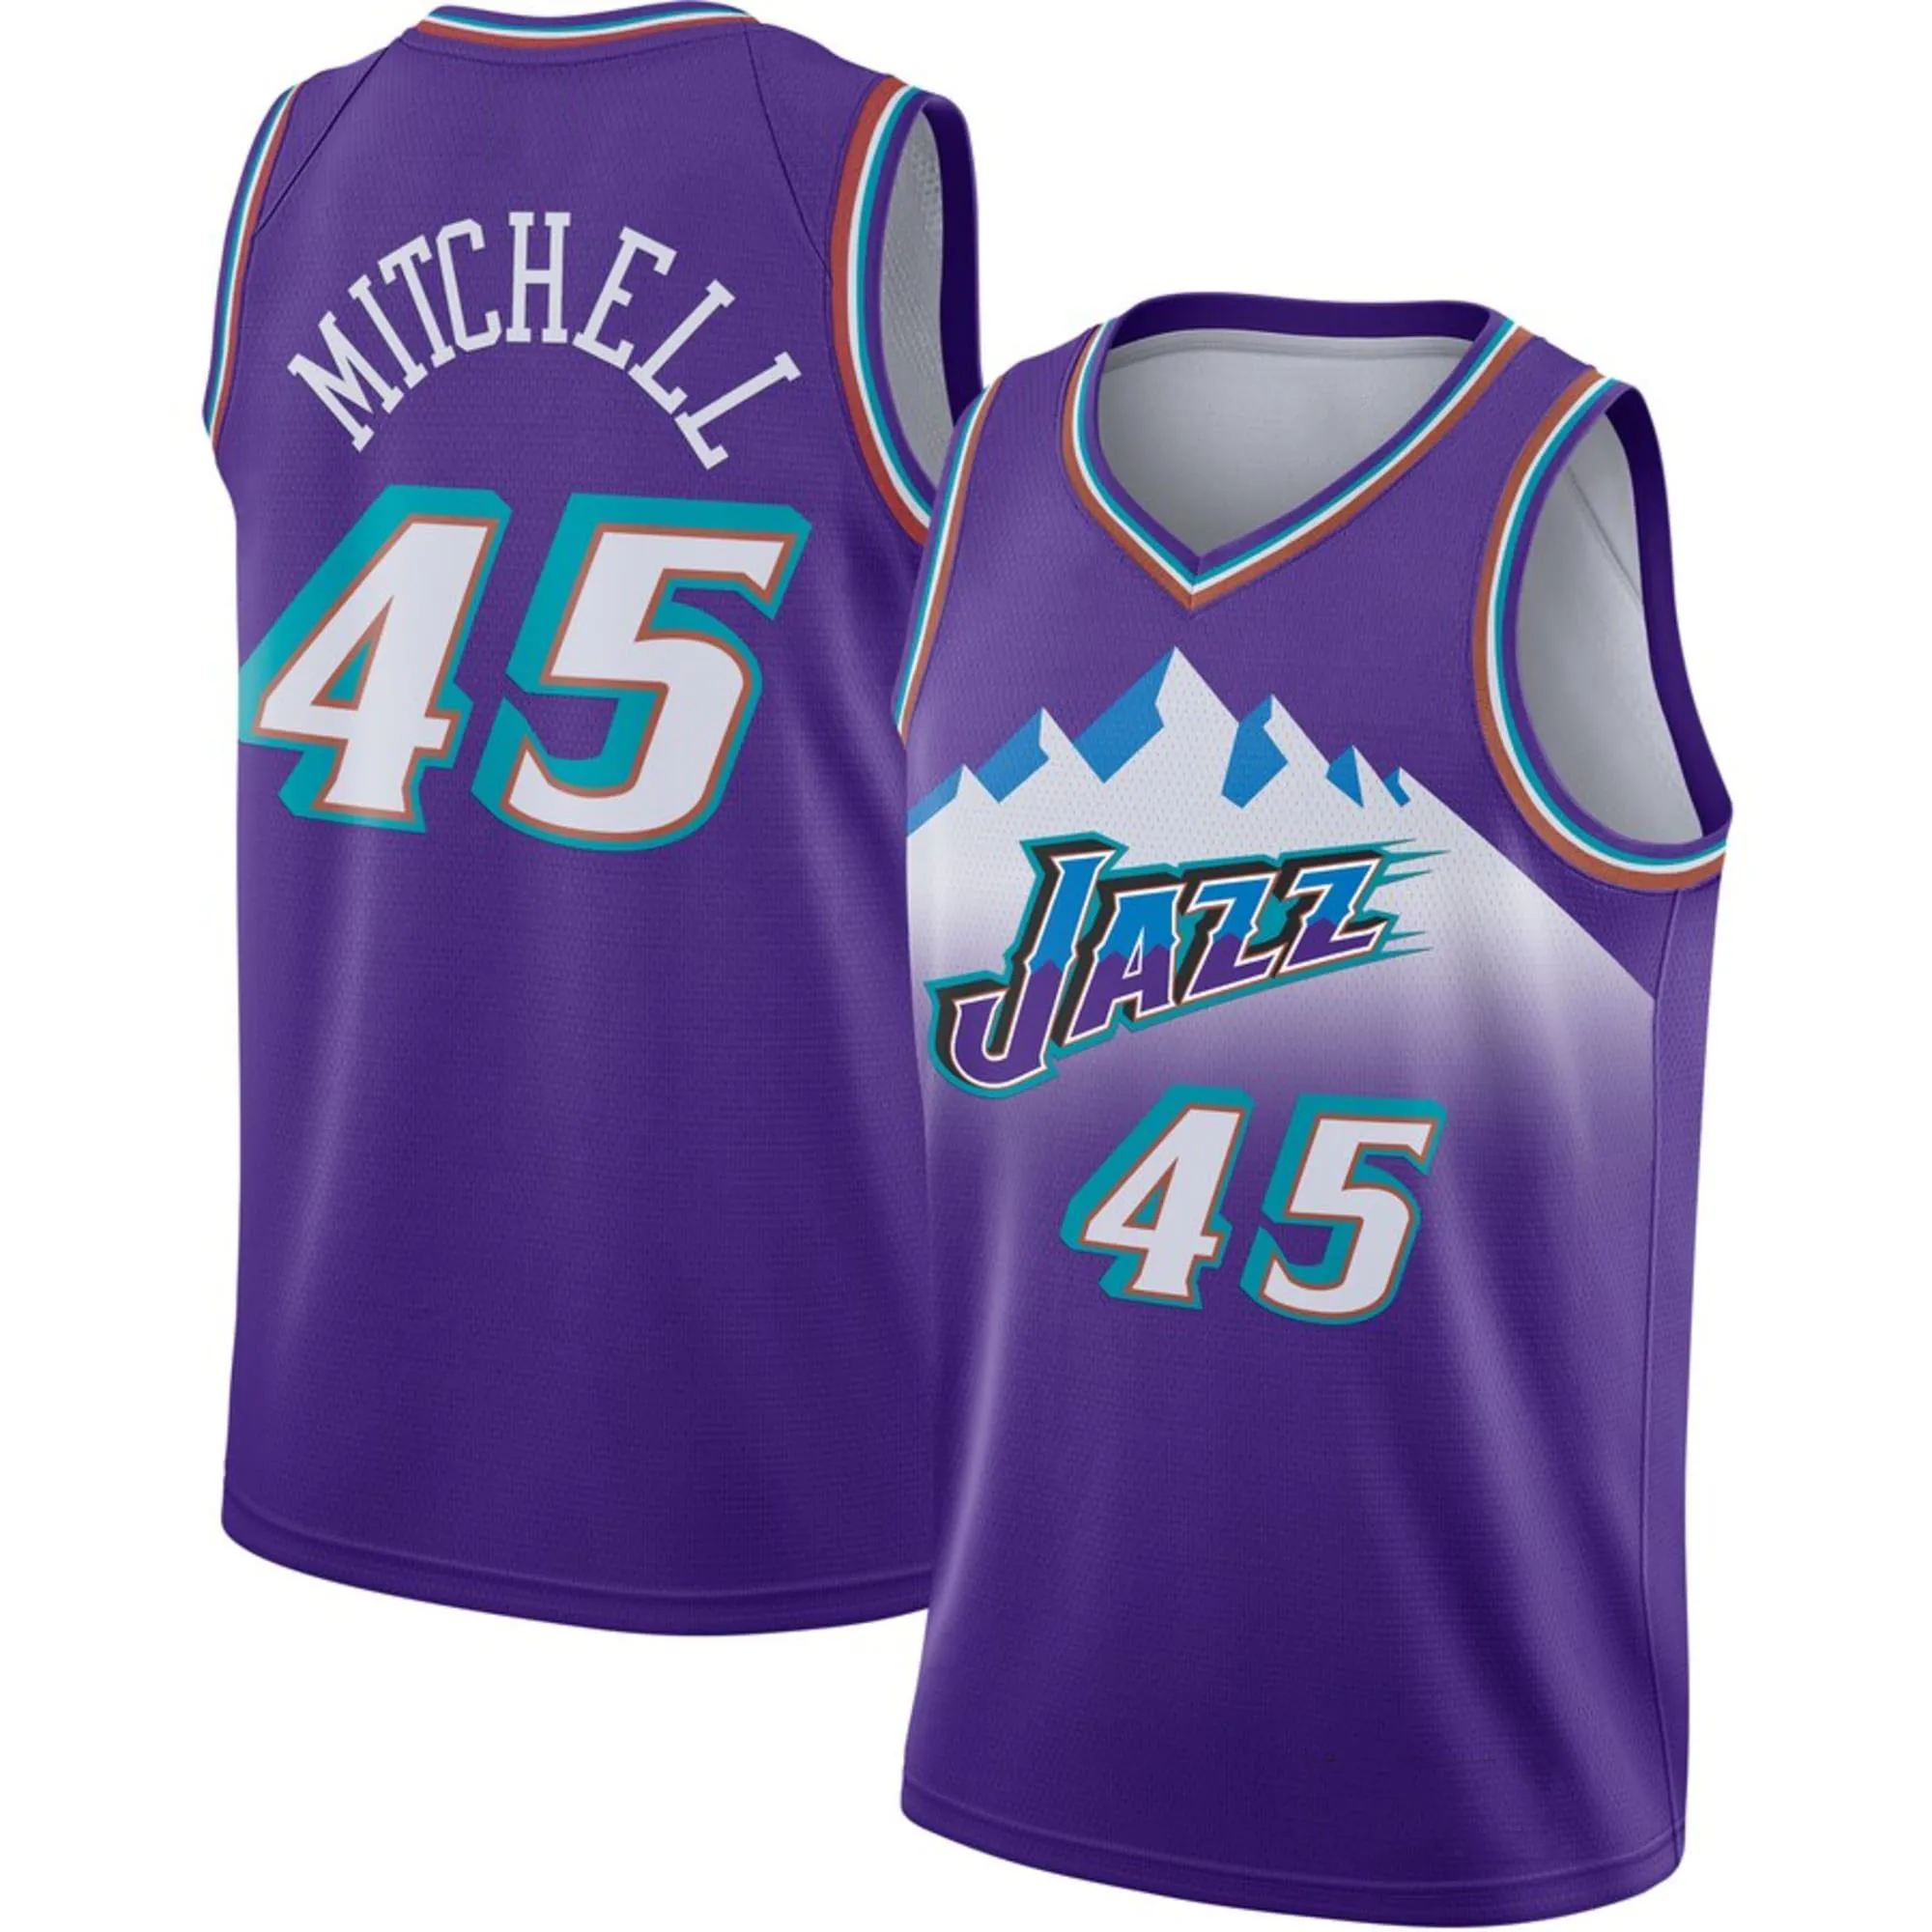 Wholesale Mens Utah jersey John 12 Stockton Karl 32 Malone Donovan 45  Mitchell Jazz Basketball Jerseys purple white From m.